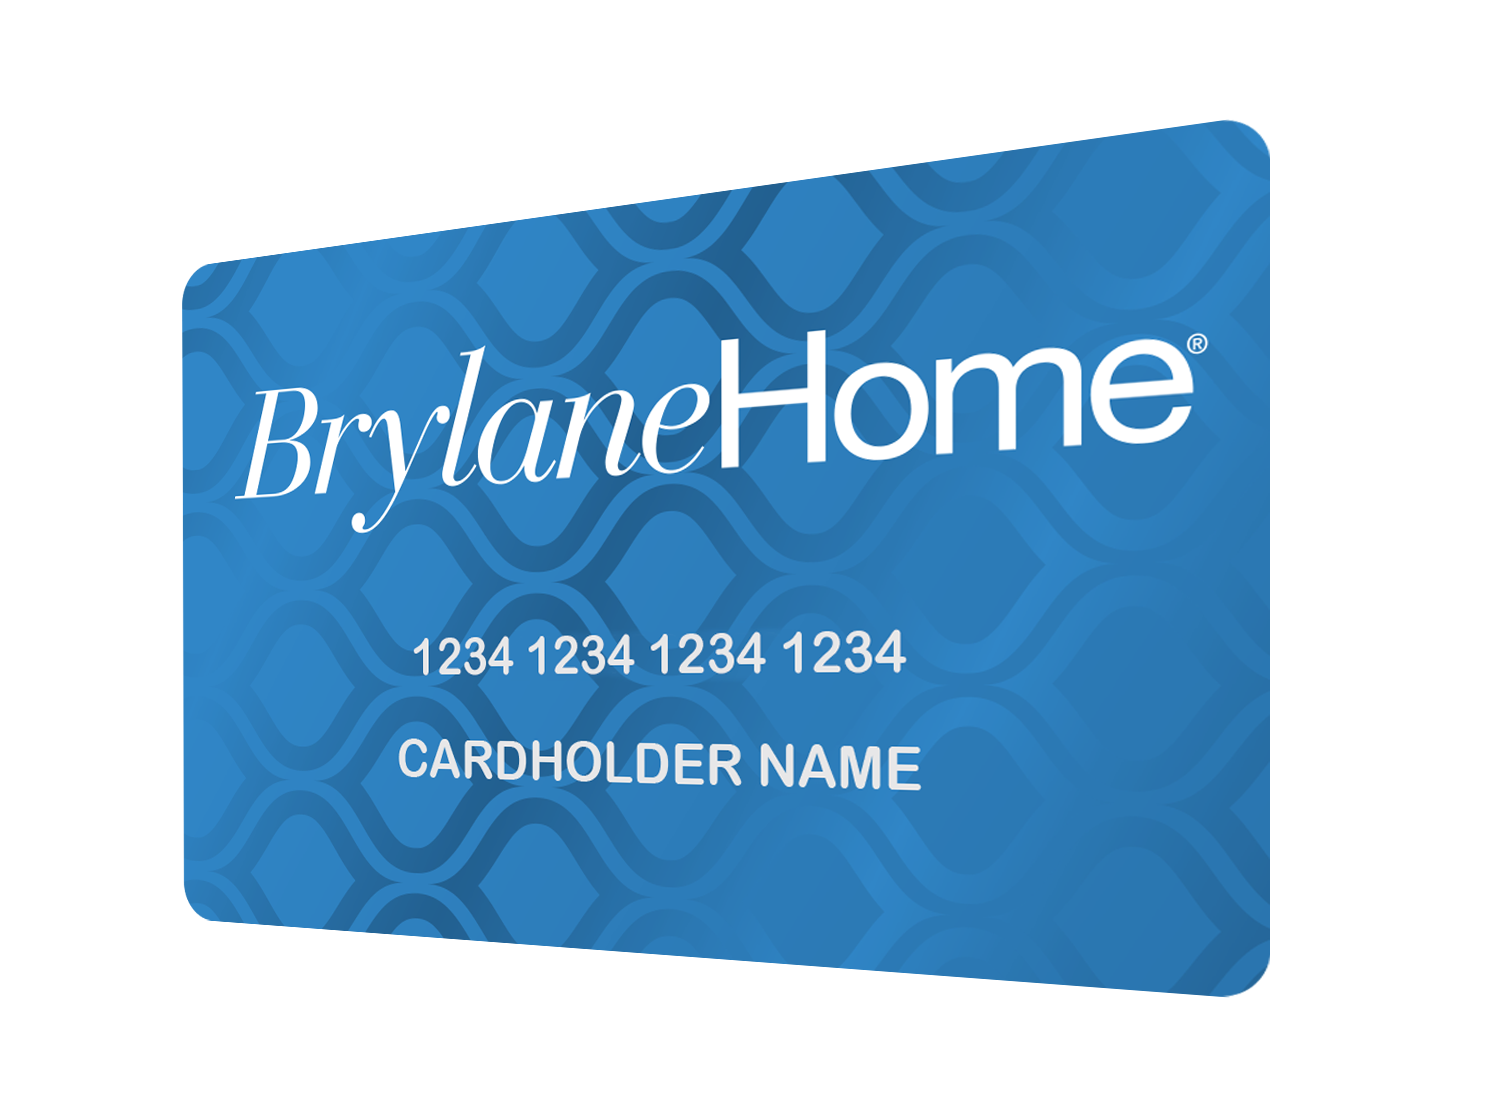 BrylaneHome Credit Card